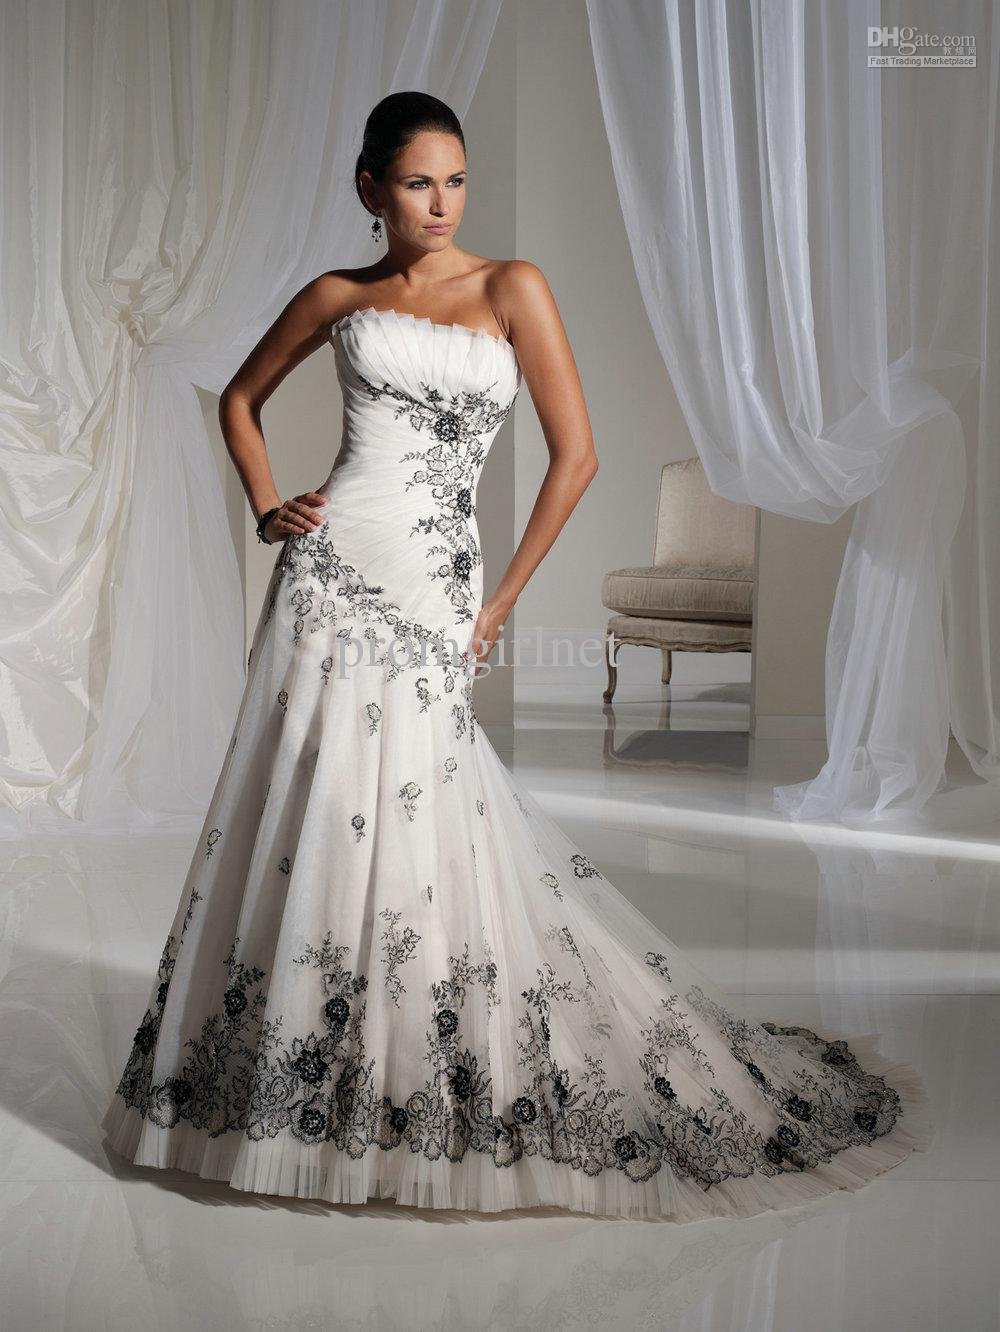 grey with black lace wedding dress